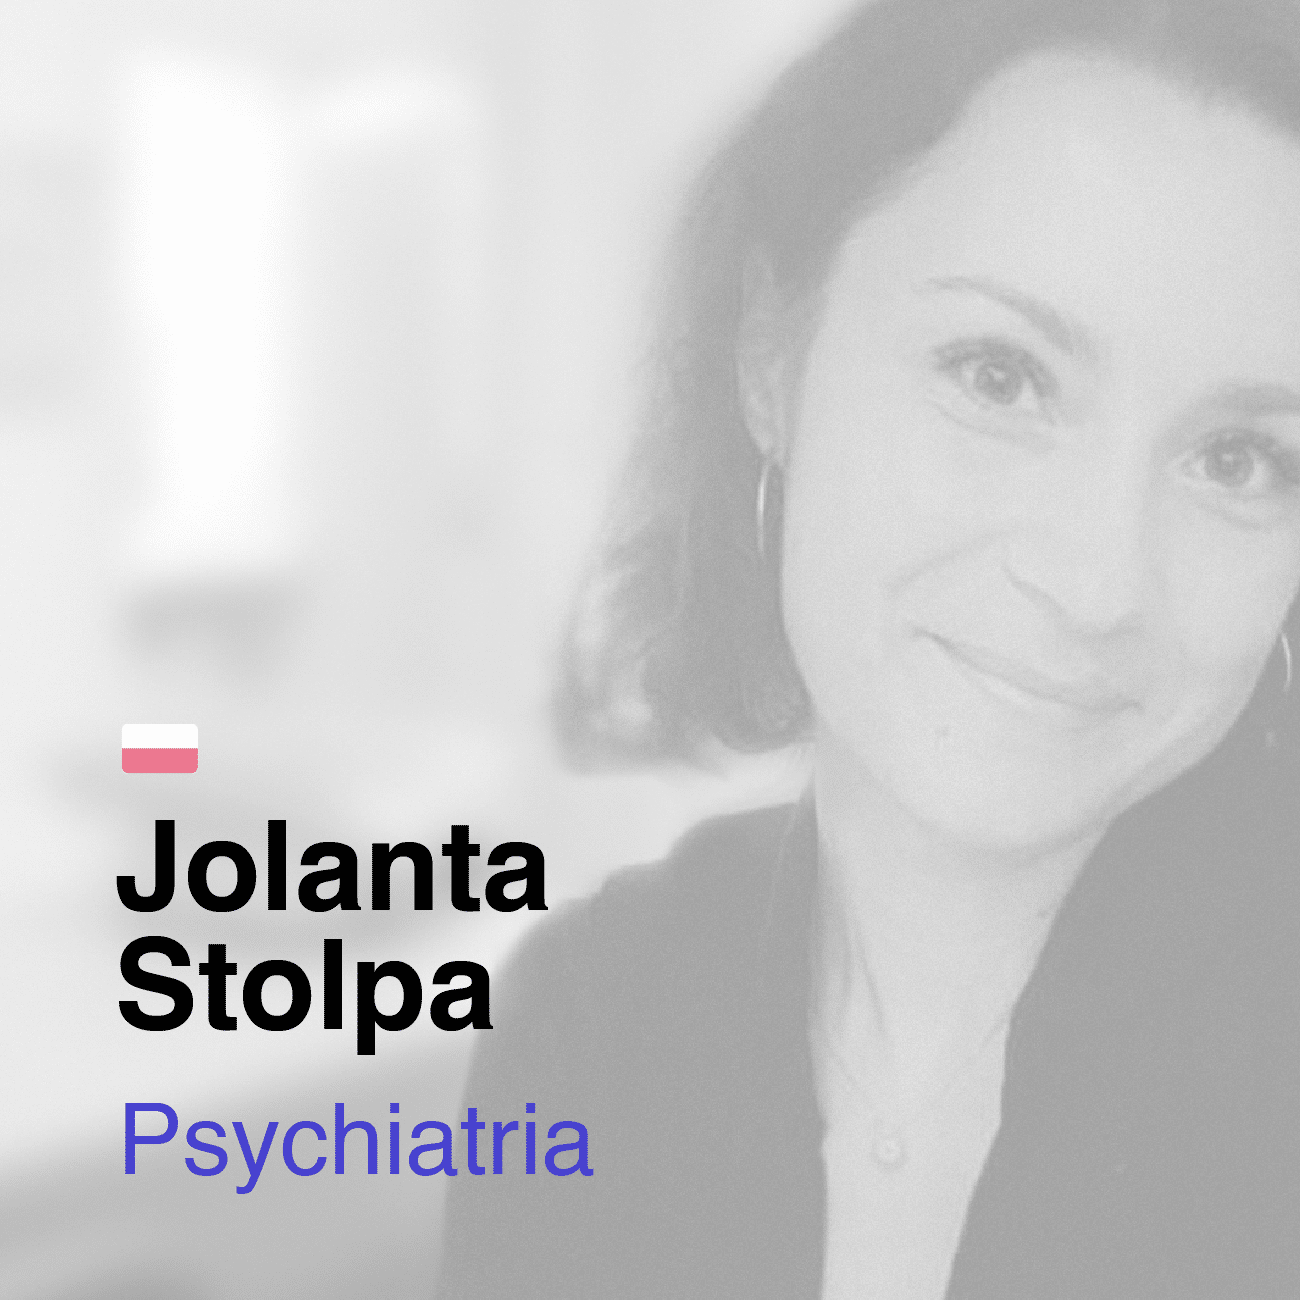 Jolanta Stolpa Psychiatra medicana.pl Centrum Terapii Medyczna Marihuana